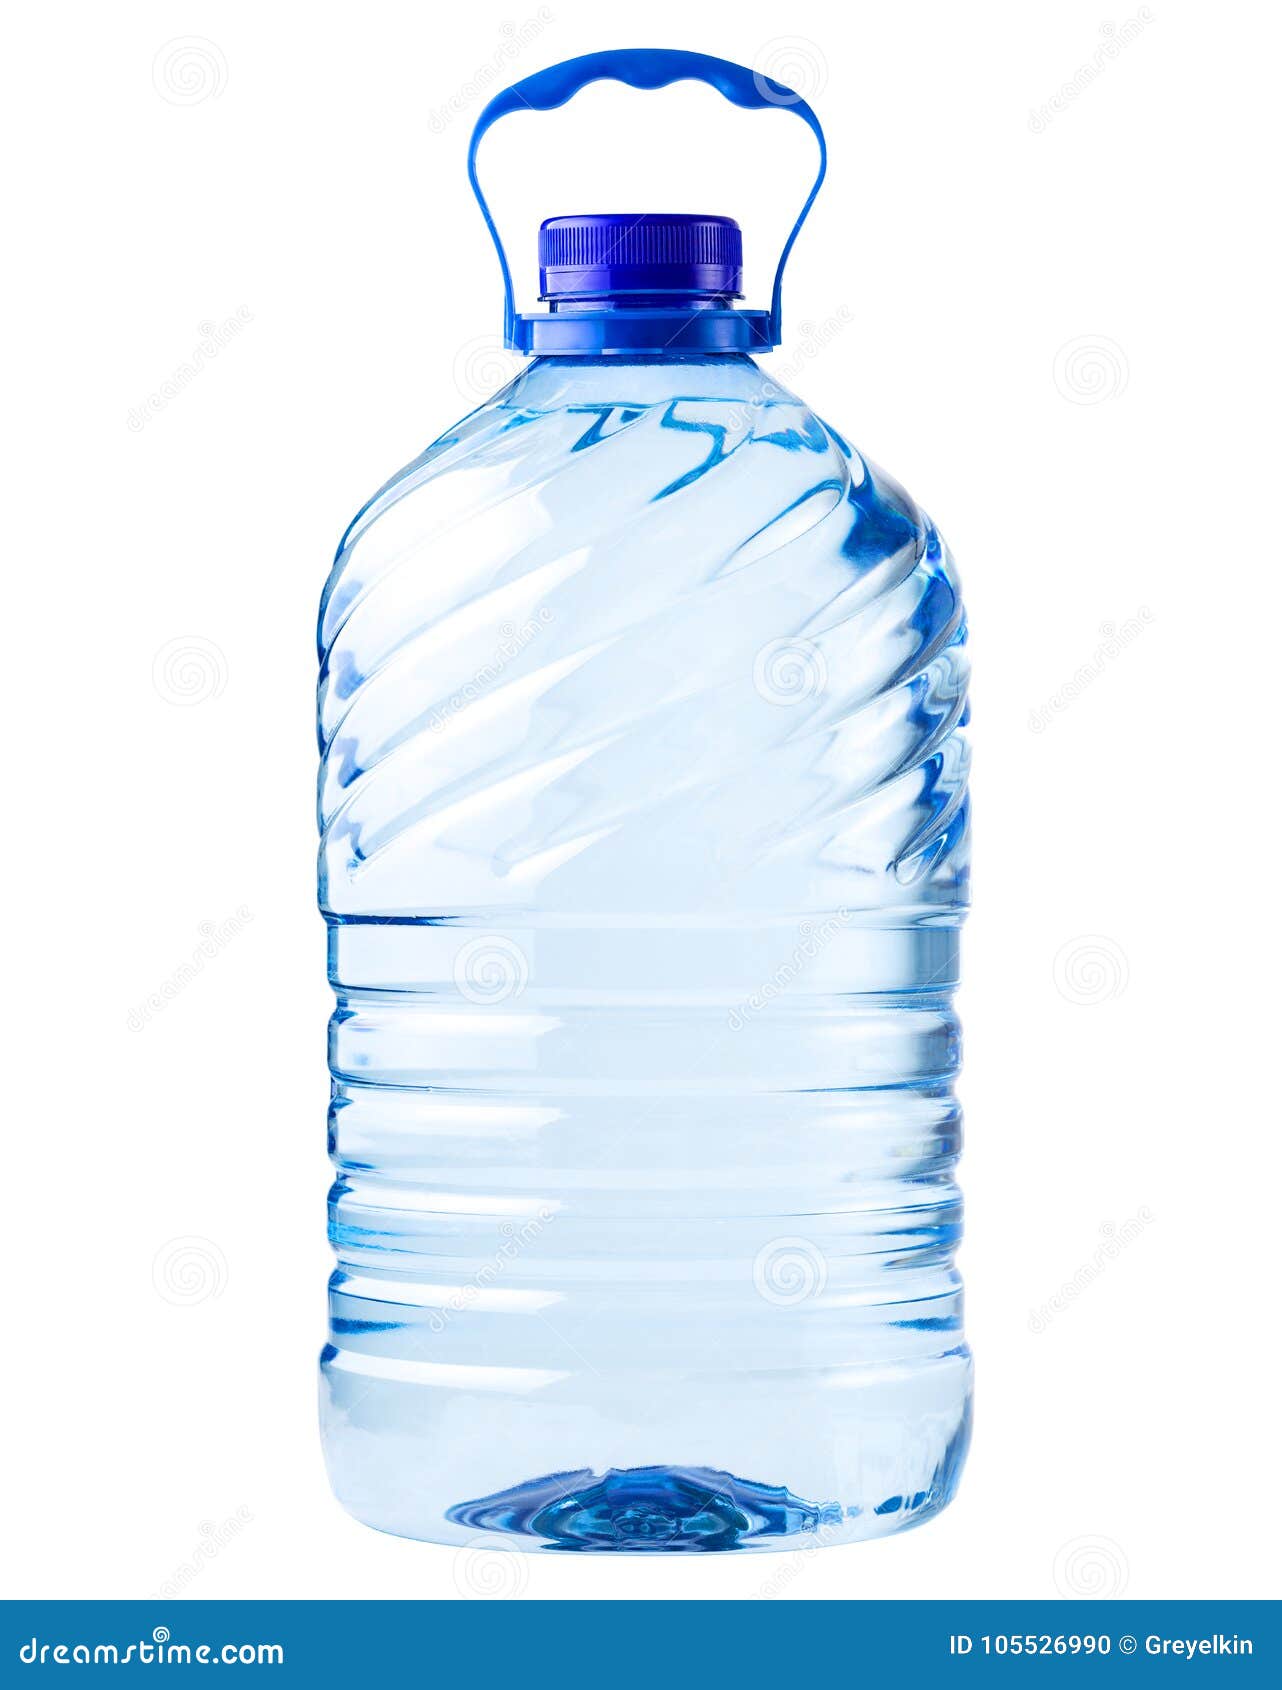 Bottle transparent plastic stock photo. Image of freshness - 105526990